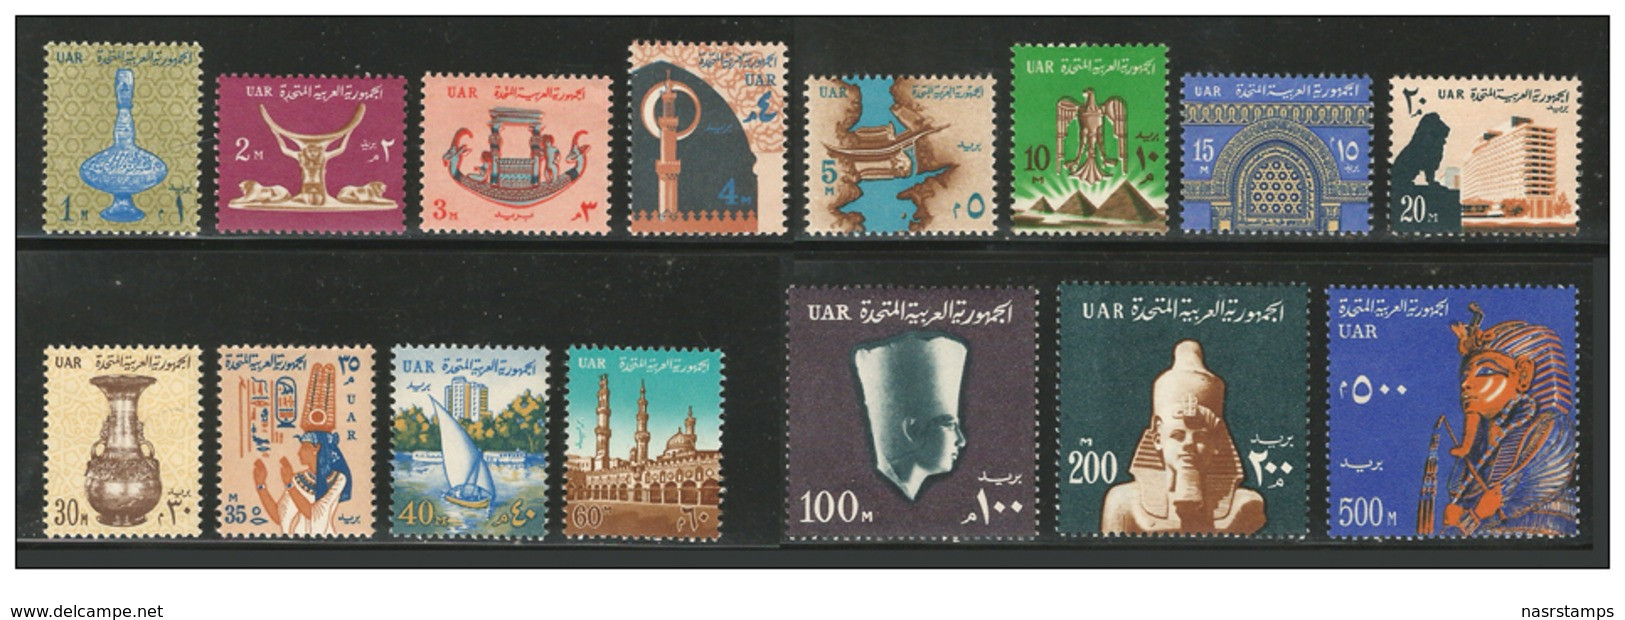 Egypt - 1964-1967 - ( Definitive Issue ) - Complete Set - MNH (**) - Egyptology